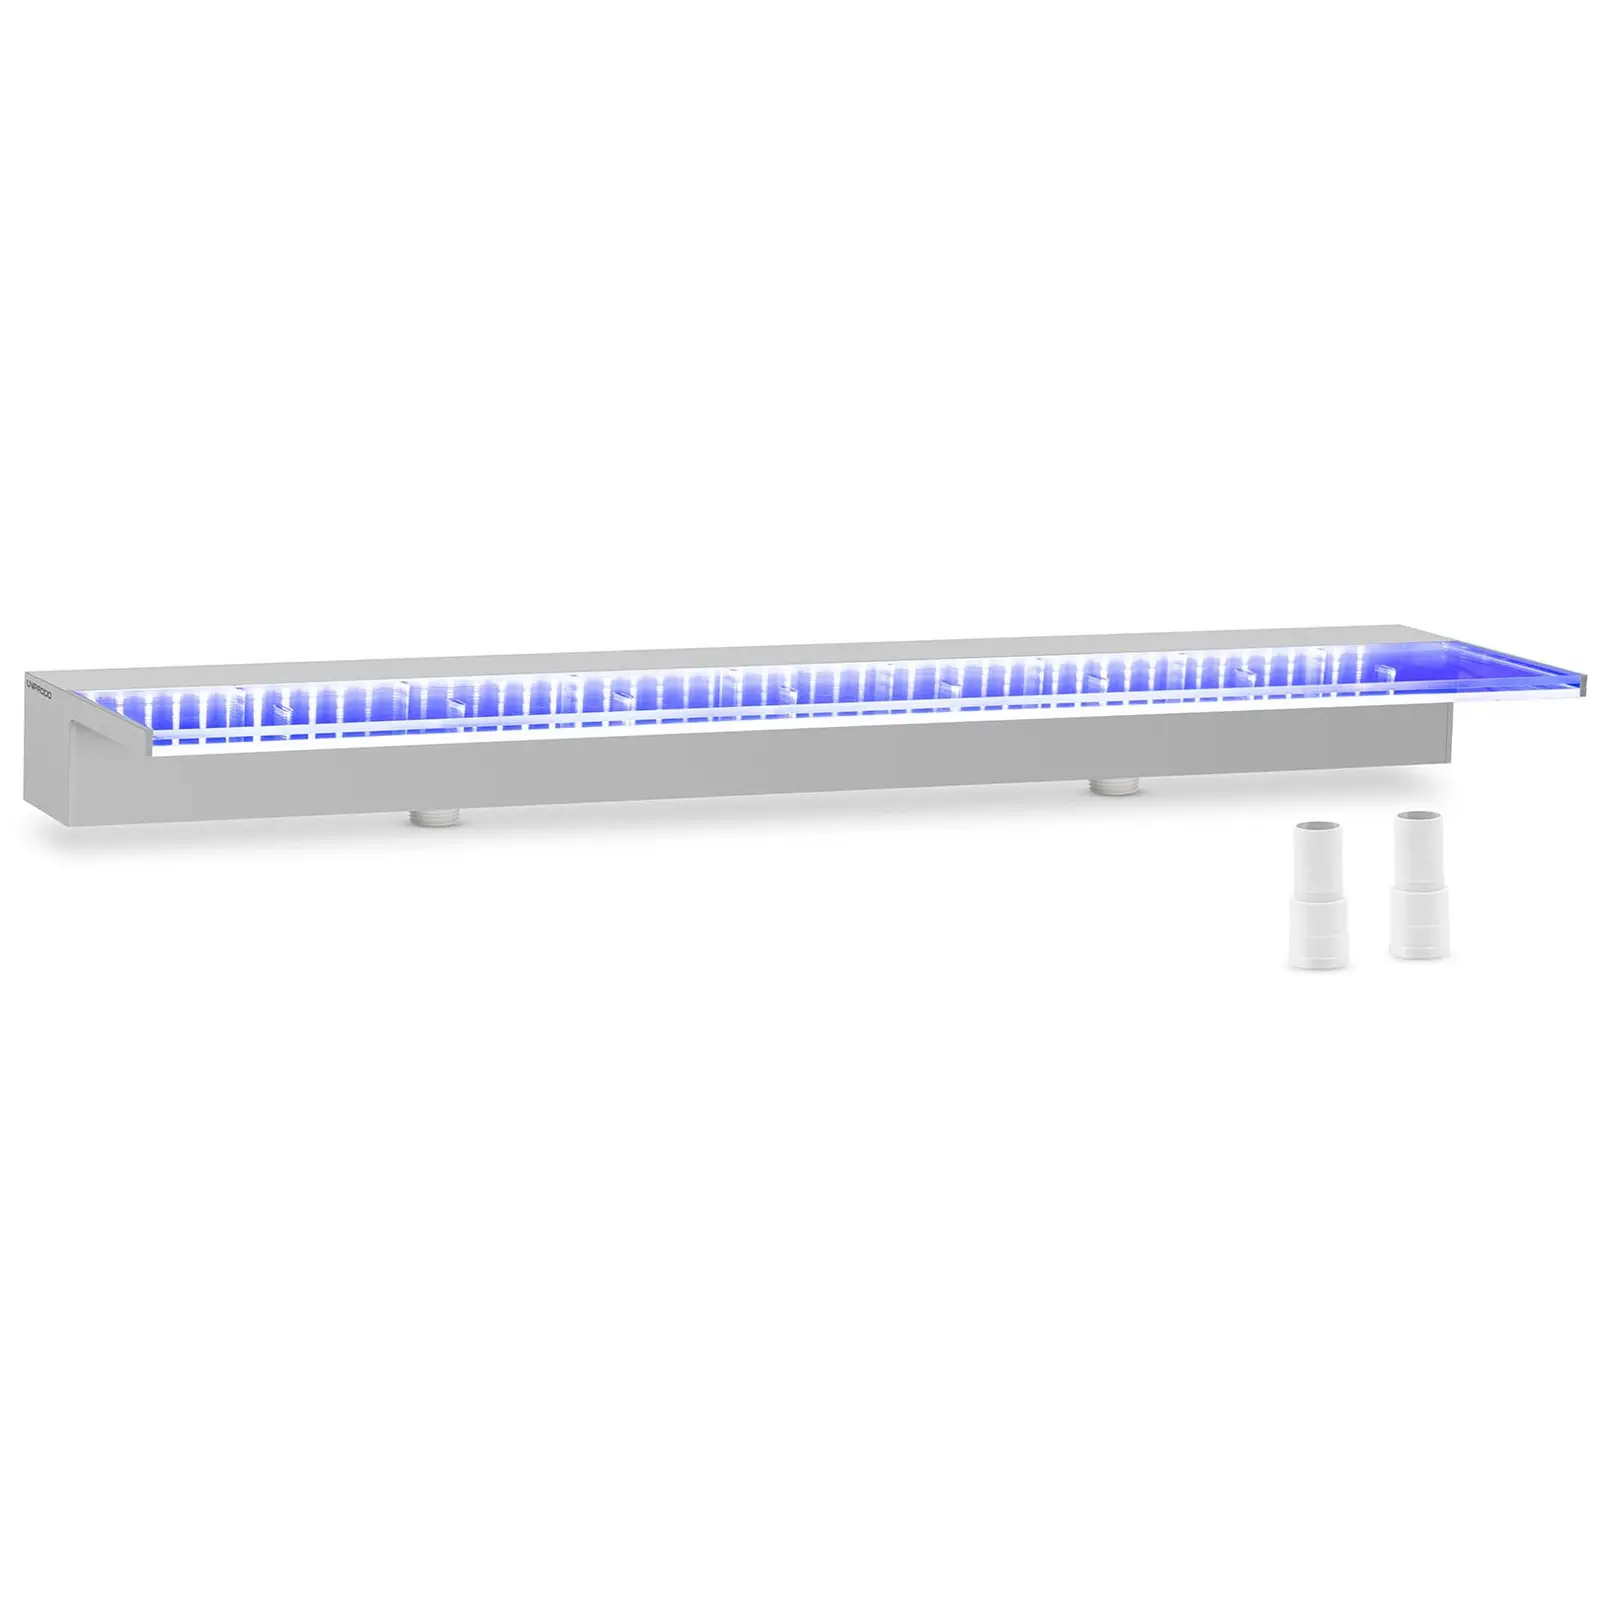 Schwalldusche - 90 cm - LED-Beleuchtung - Blau  - 135 mm Wasserauslauf